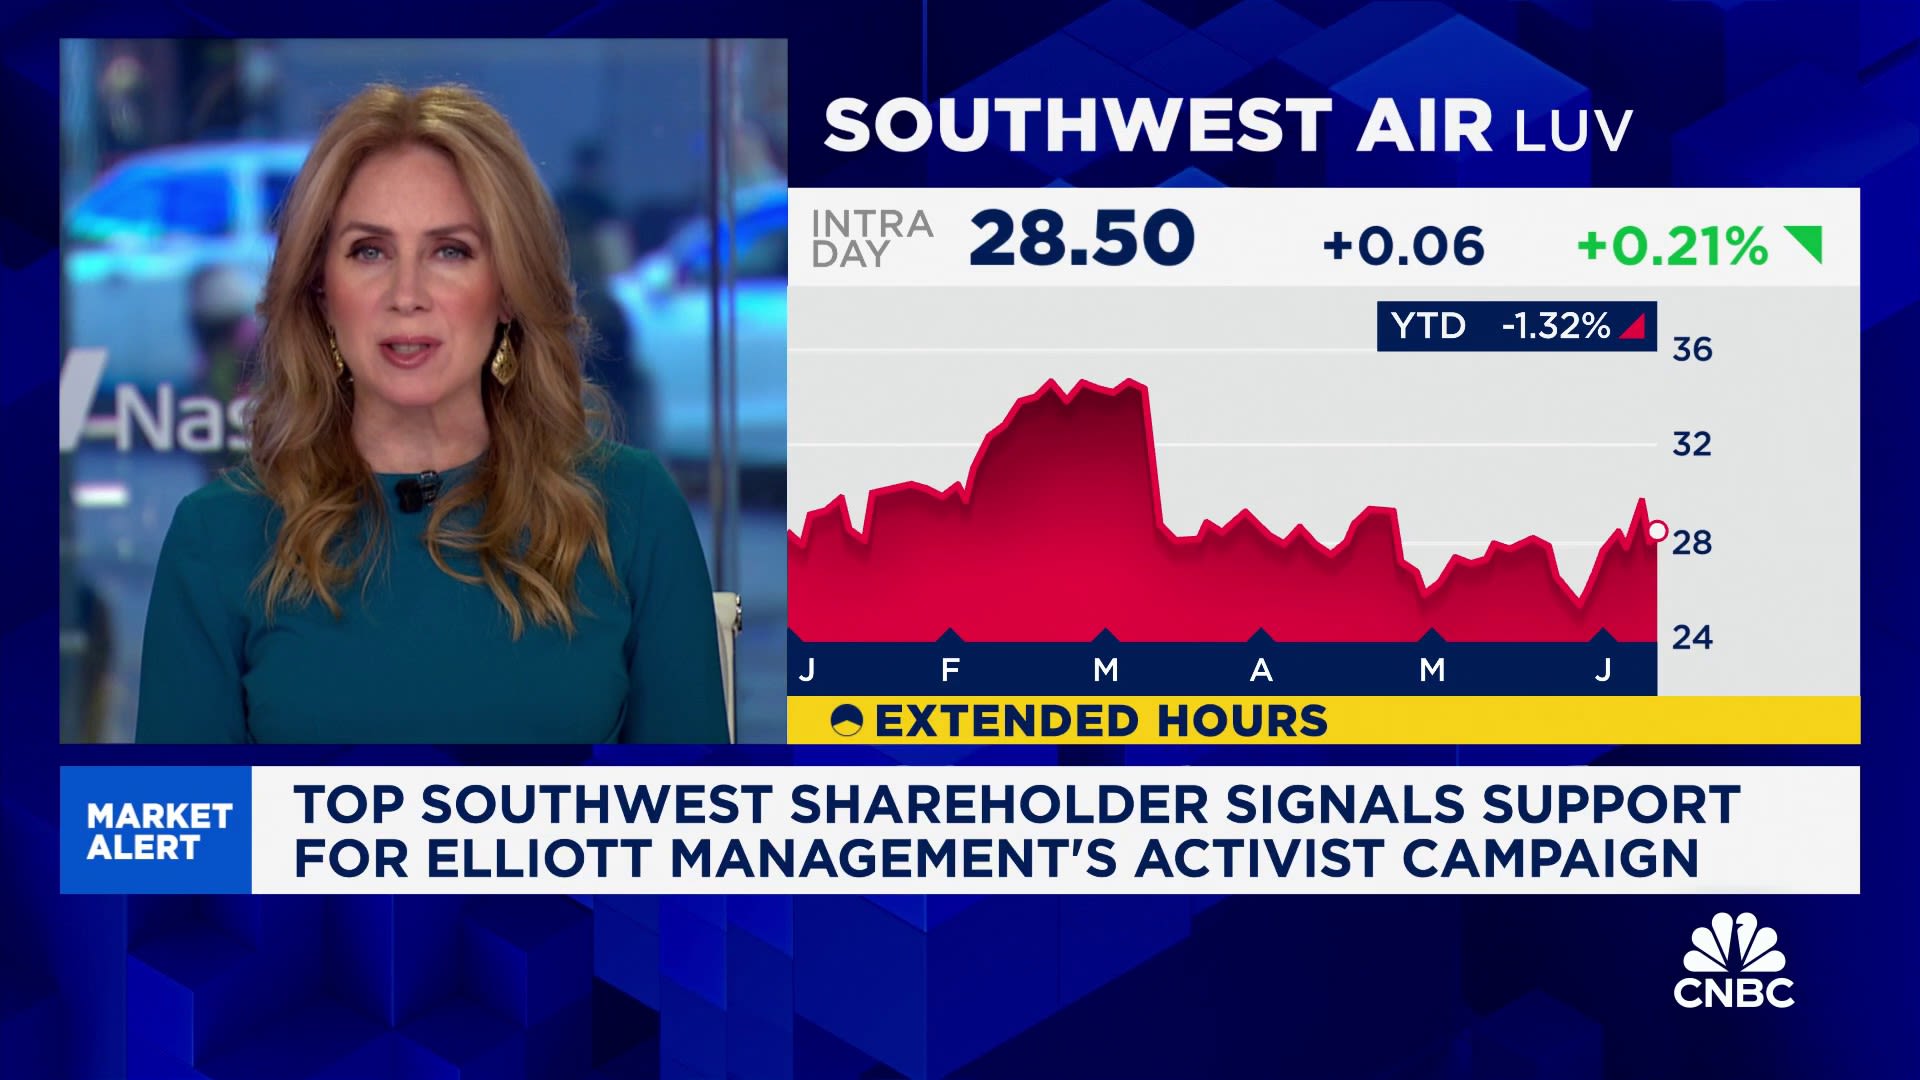 Top Southwest shareholder signals support for Elliott Management's activist campaign